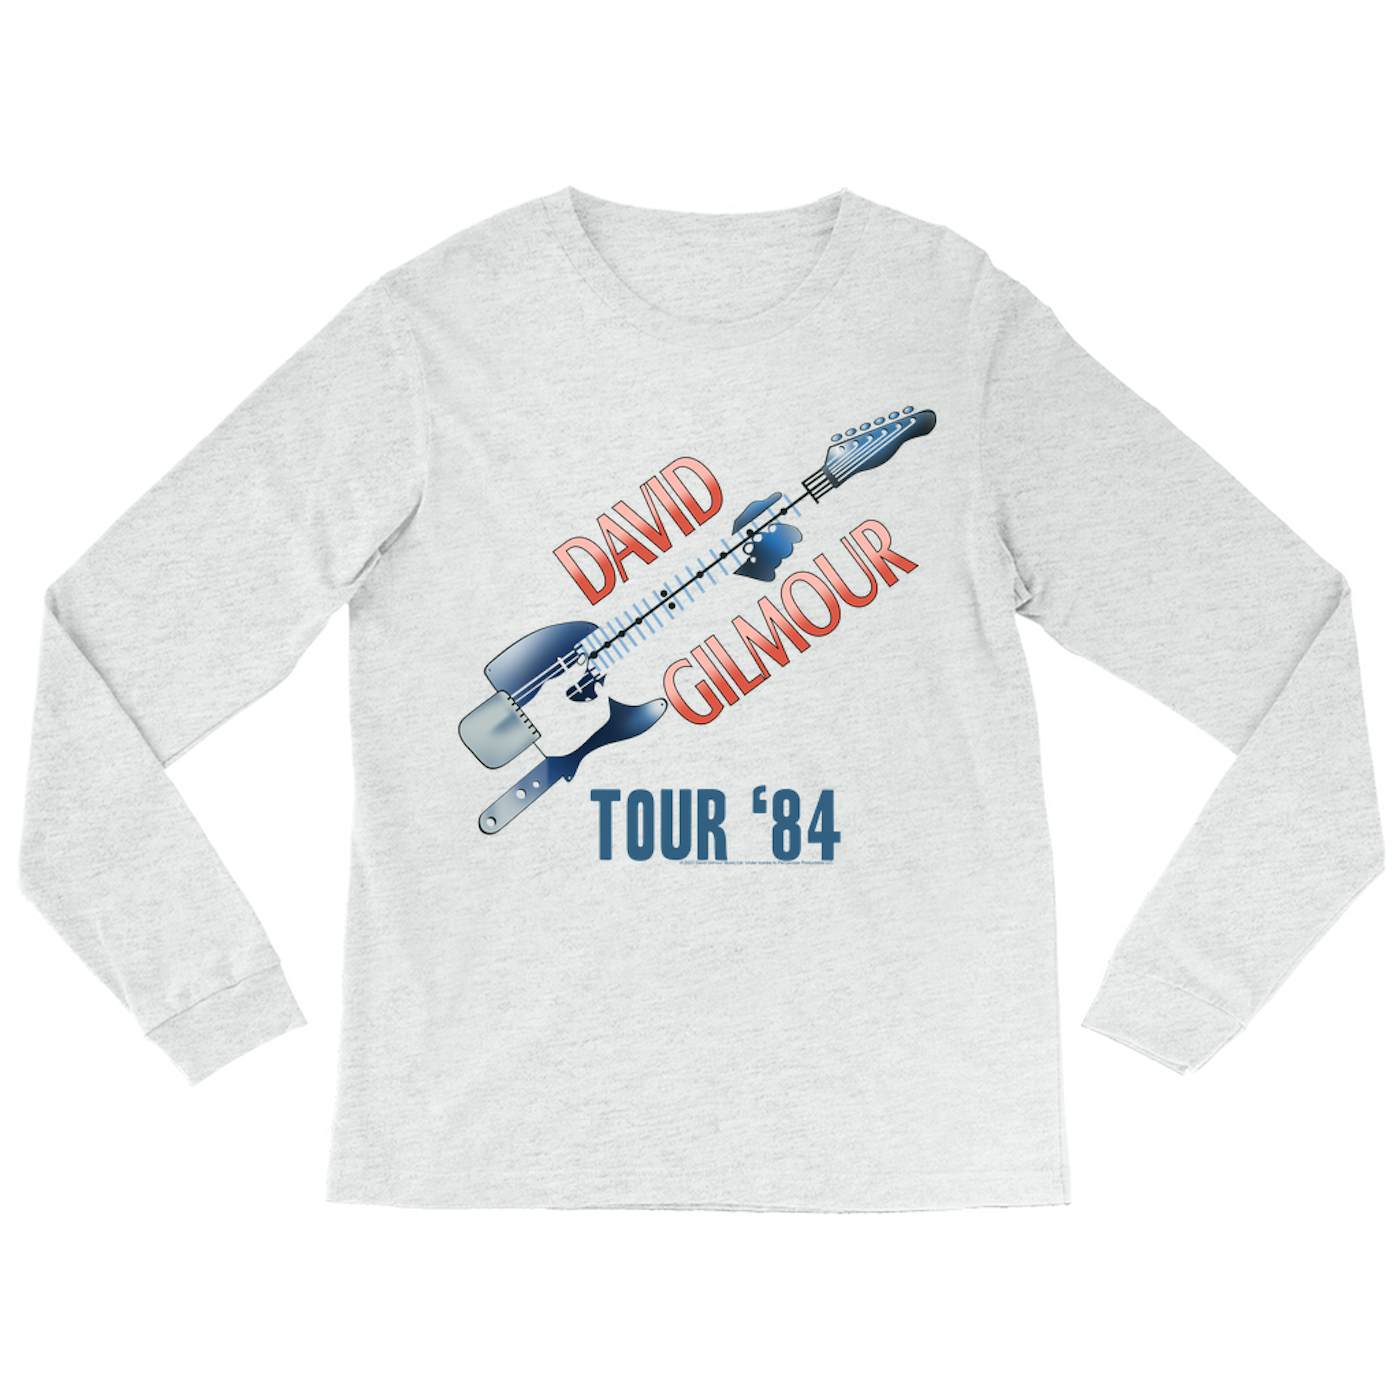 David Gilmour Long Sleeve Shirt | Red, White, Blue 1984 Tour David Gilmour Shirt